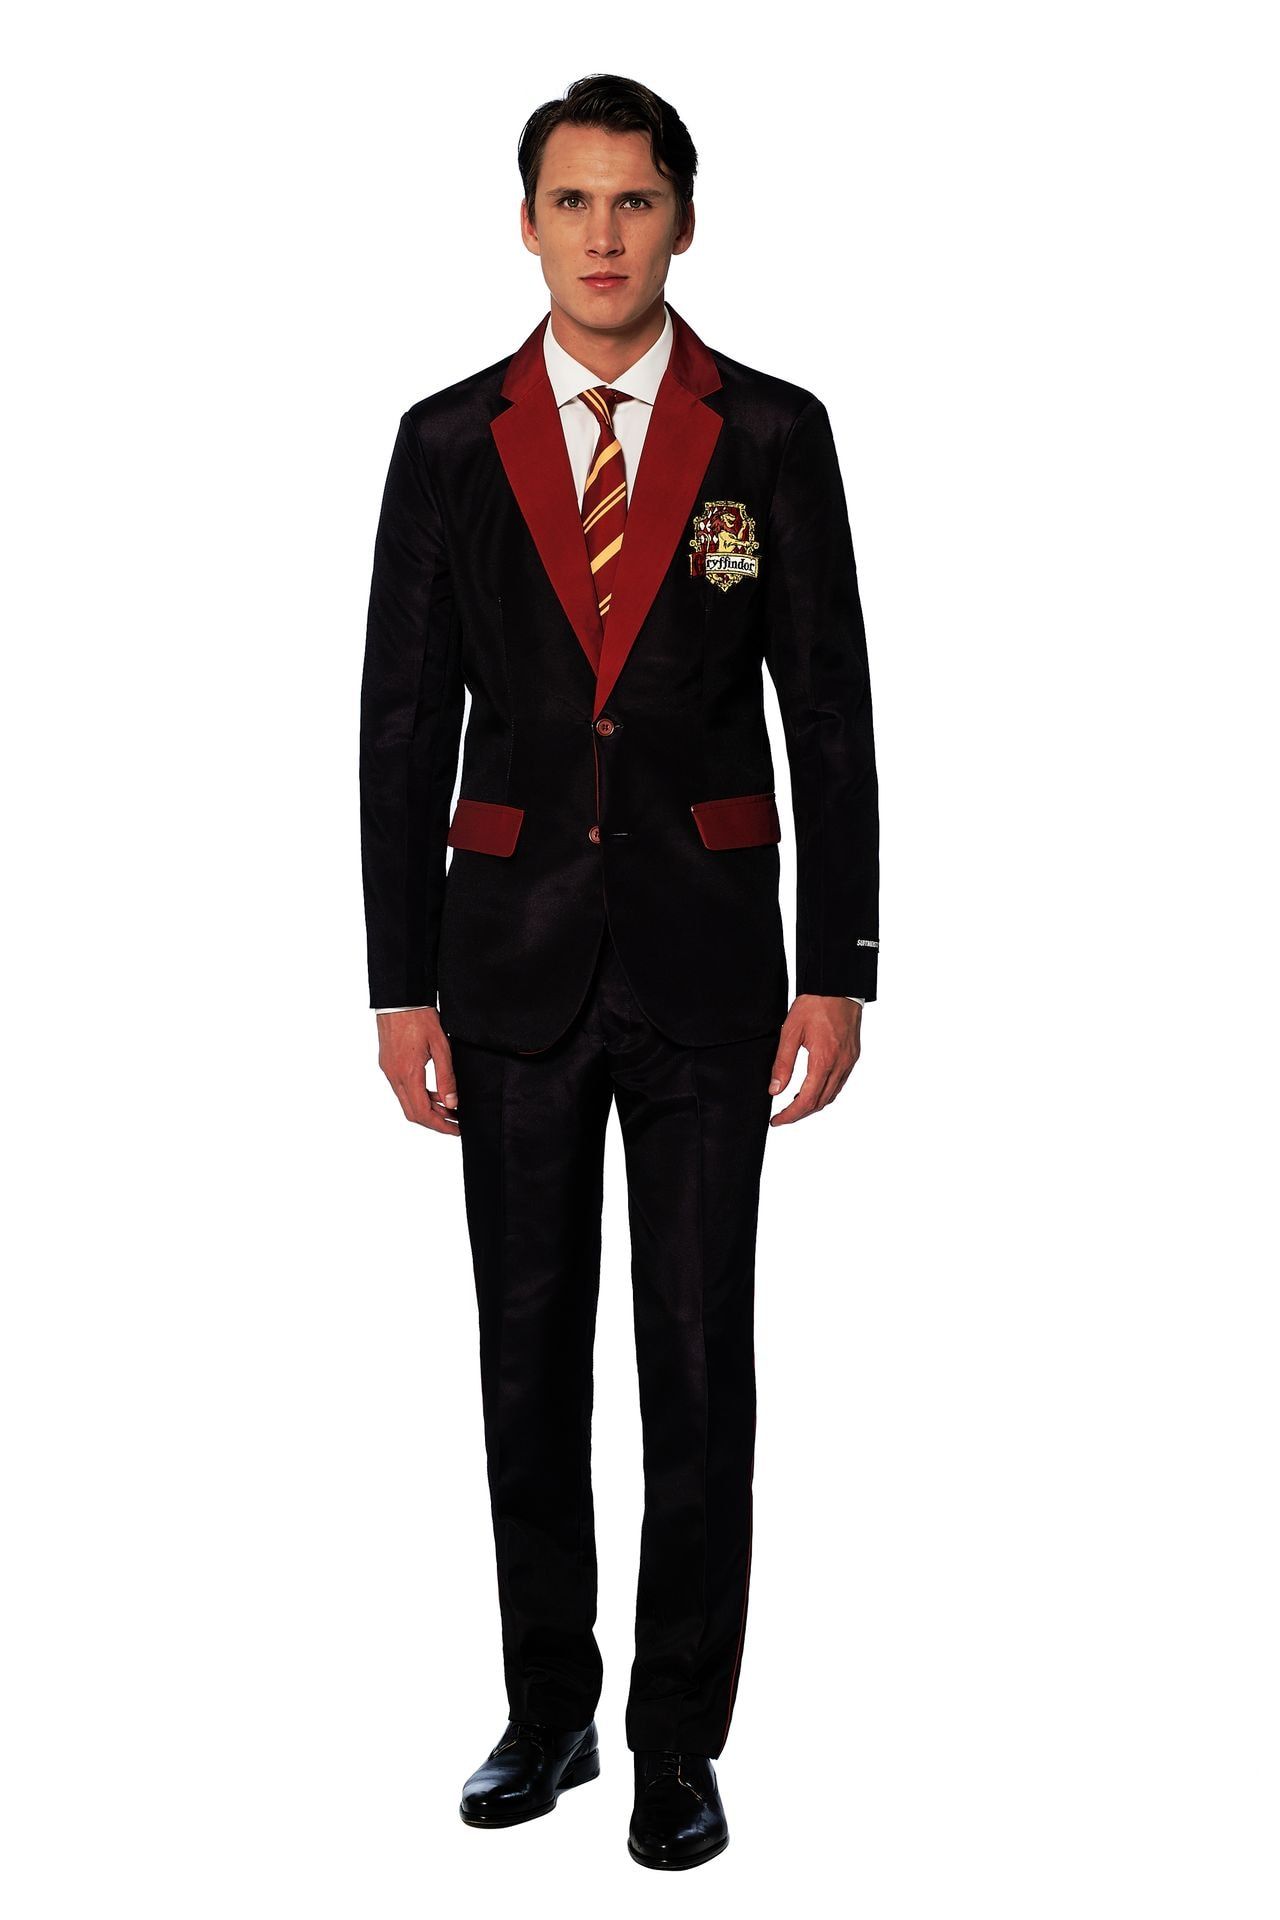 Harry Potter Suitmeister kostuum